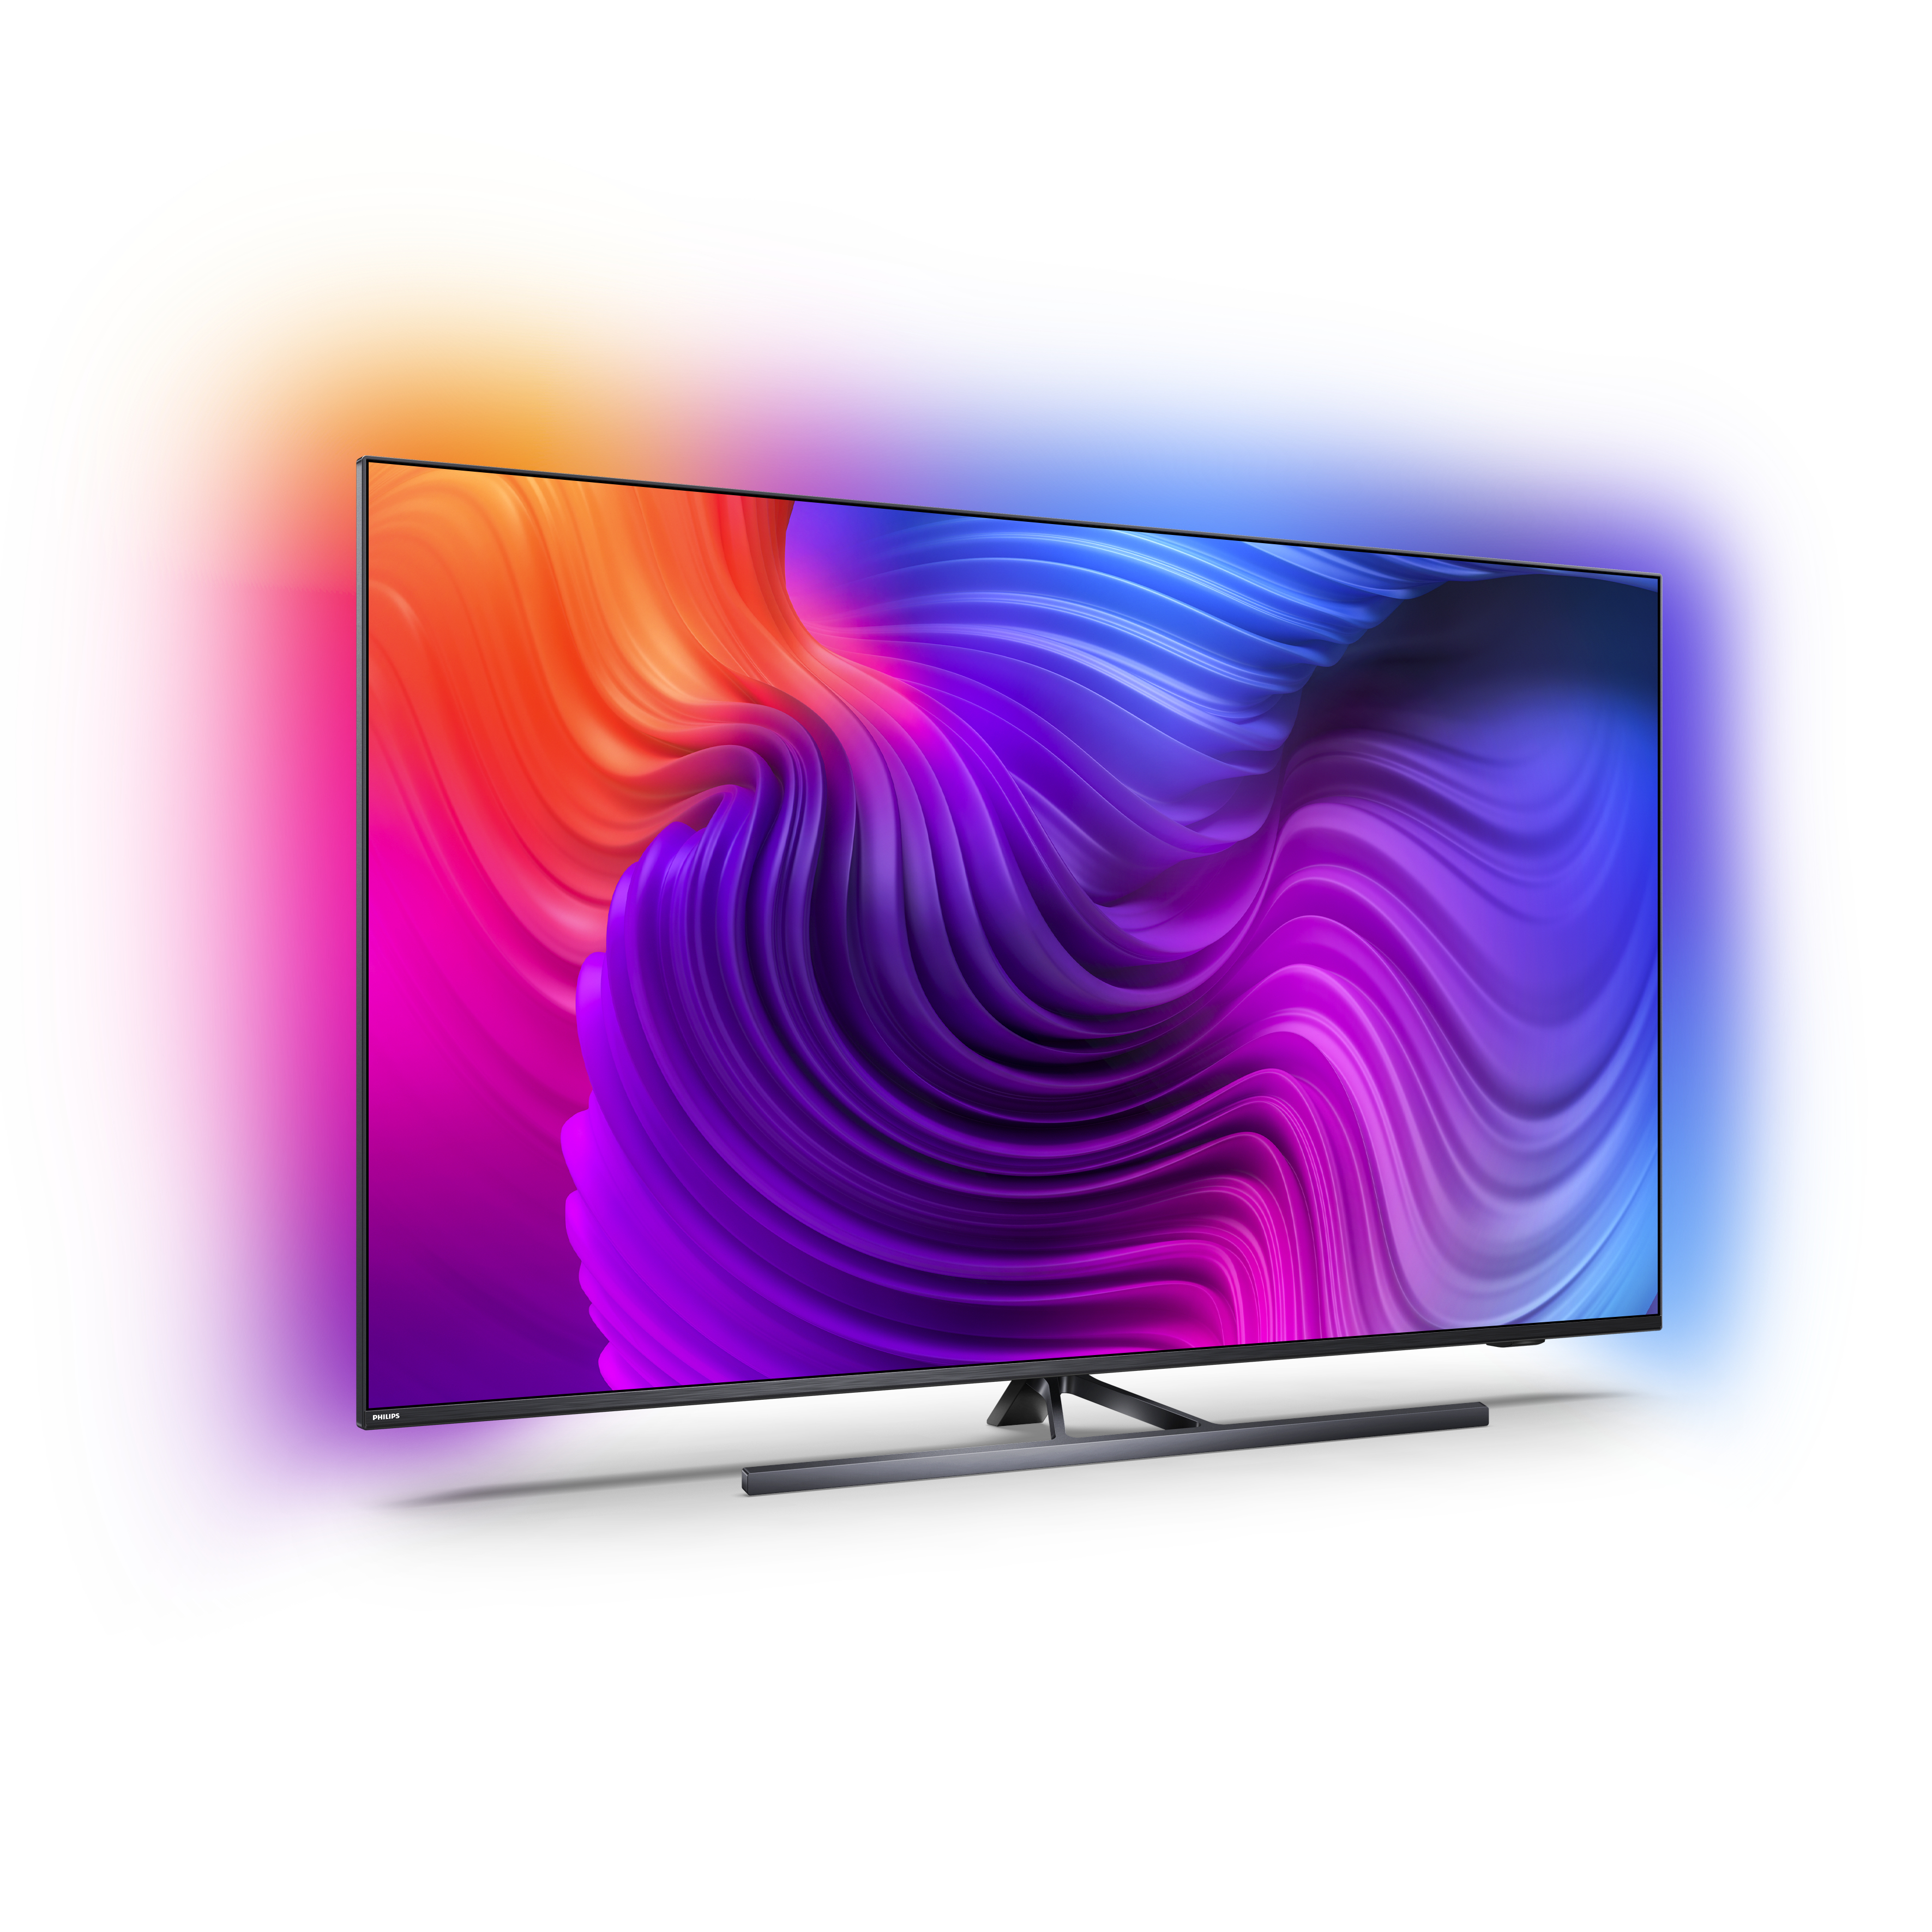 TV 50PUS8546/12 (Q)) Android Ambilight, UHD TV, PHILIPS (Flat, / 50 cm, 10 LED TV™ 4K, SMART 126 Zoll